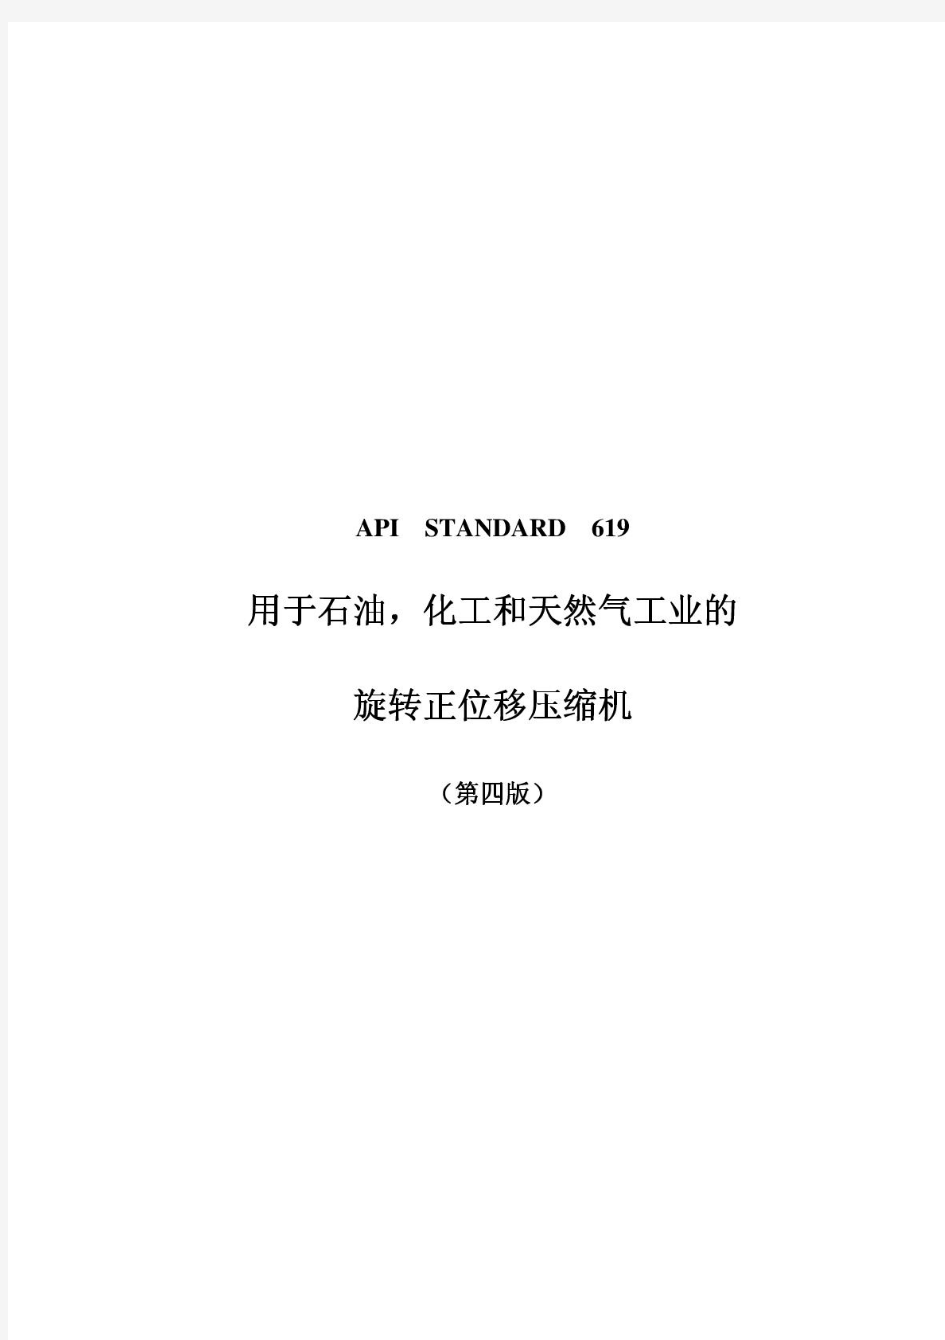 API 619 2004 (中文版)石油、化工和气体工业用螺杆压缩机